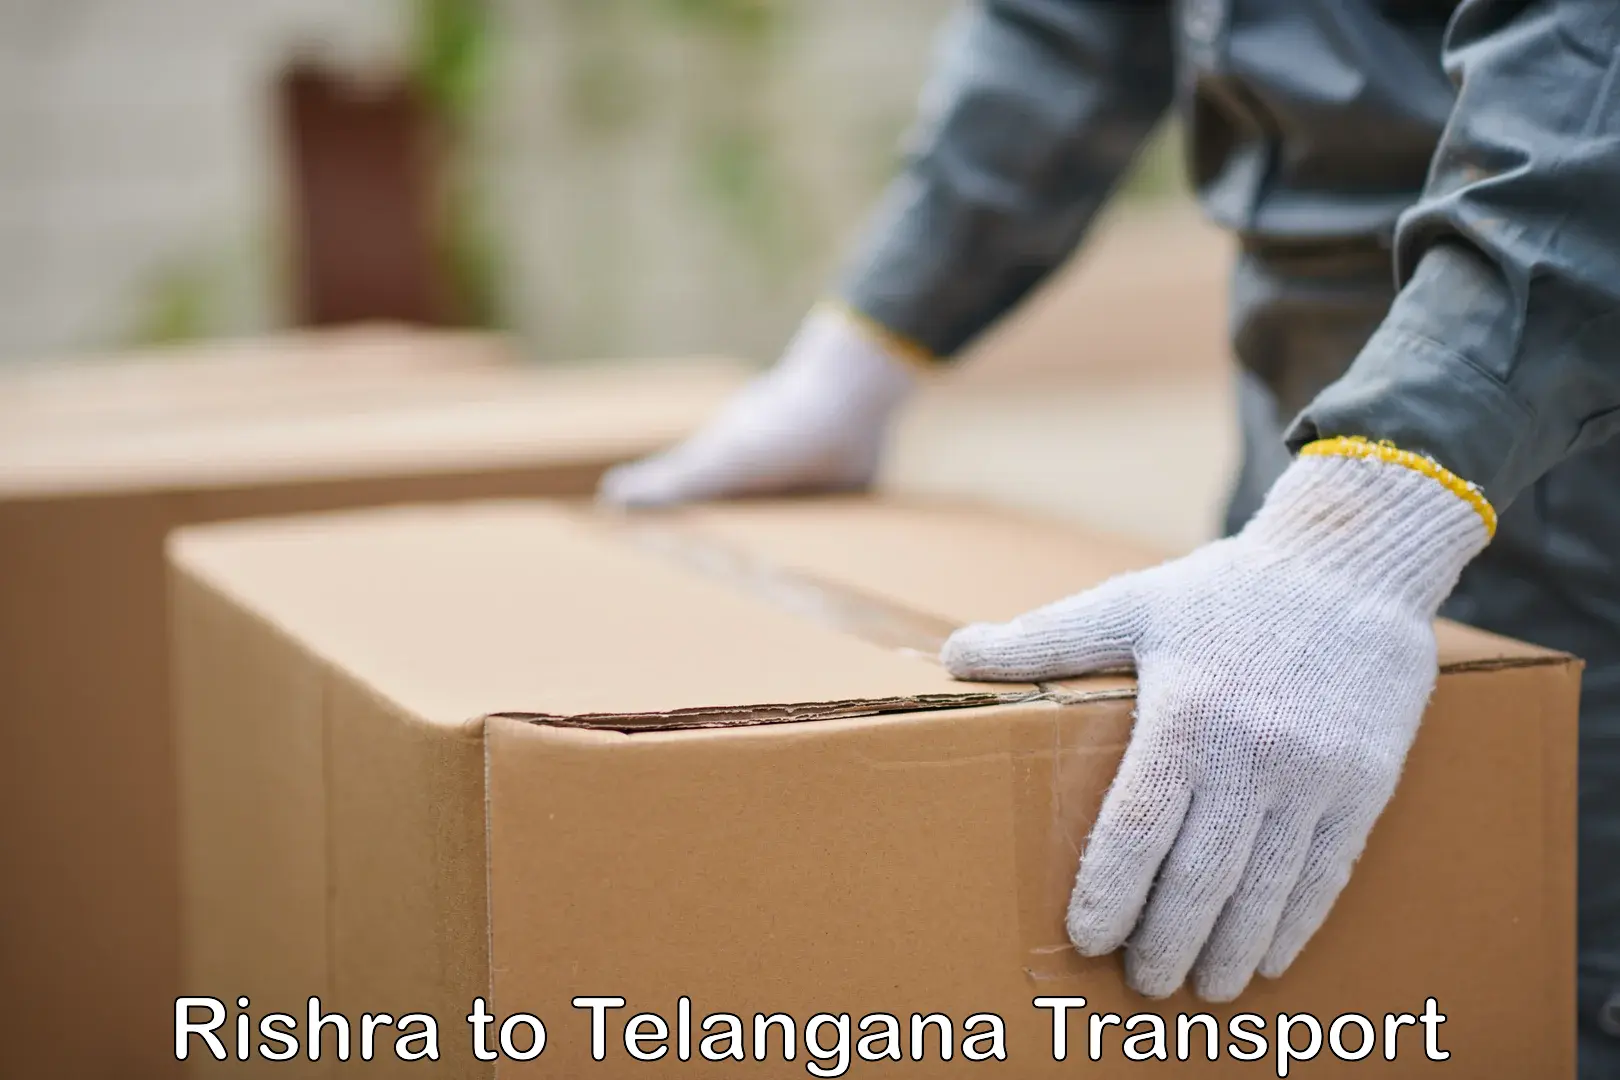 Truck transport companies in India Rishra to Kacheguda